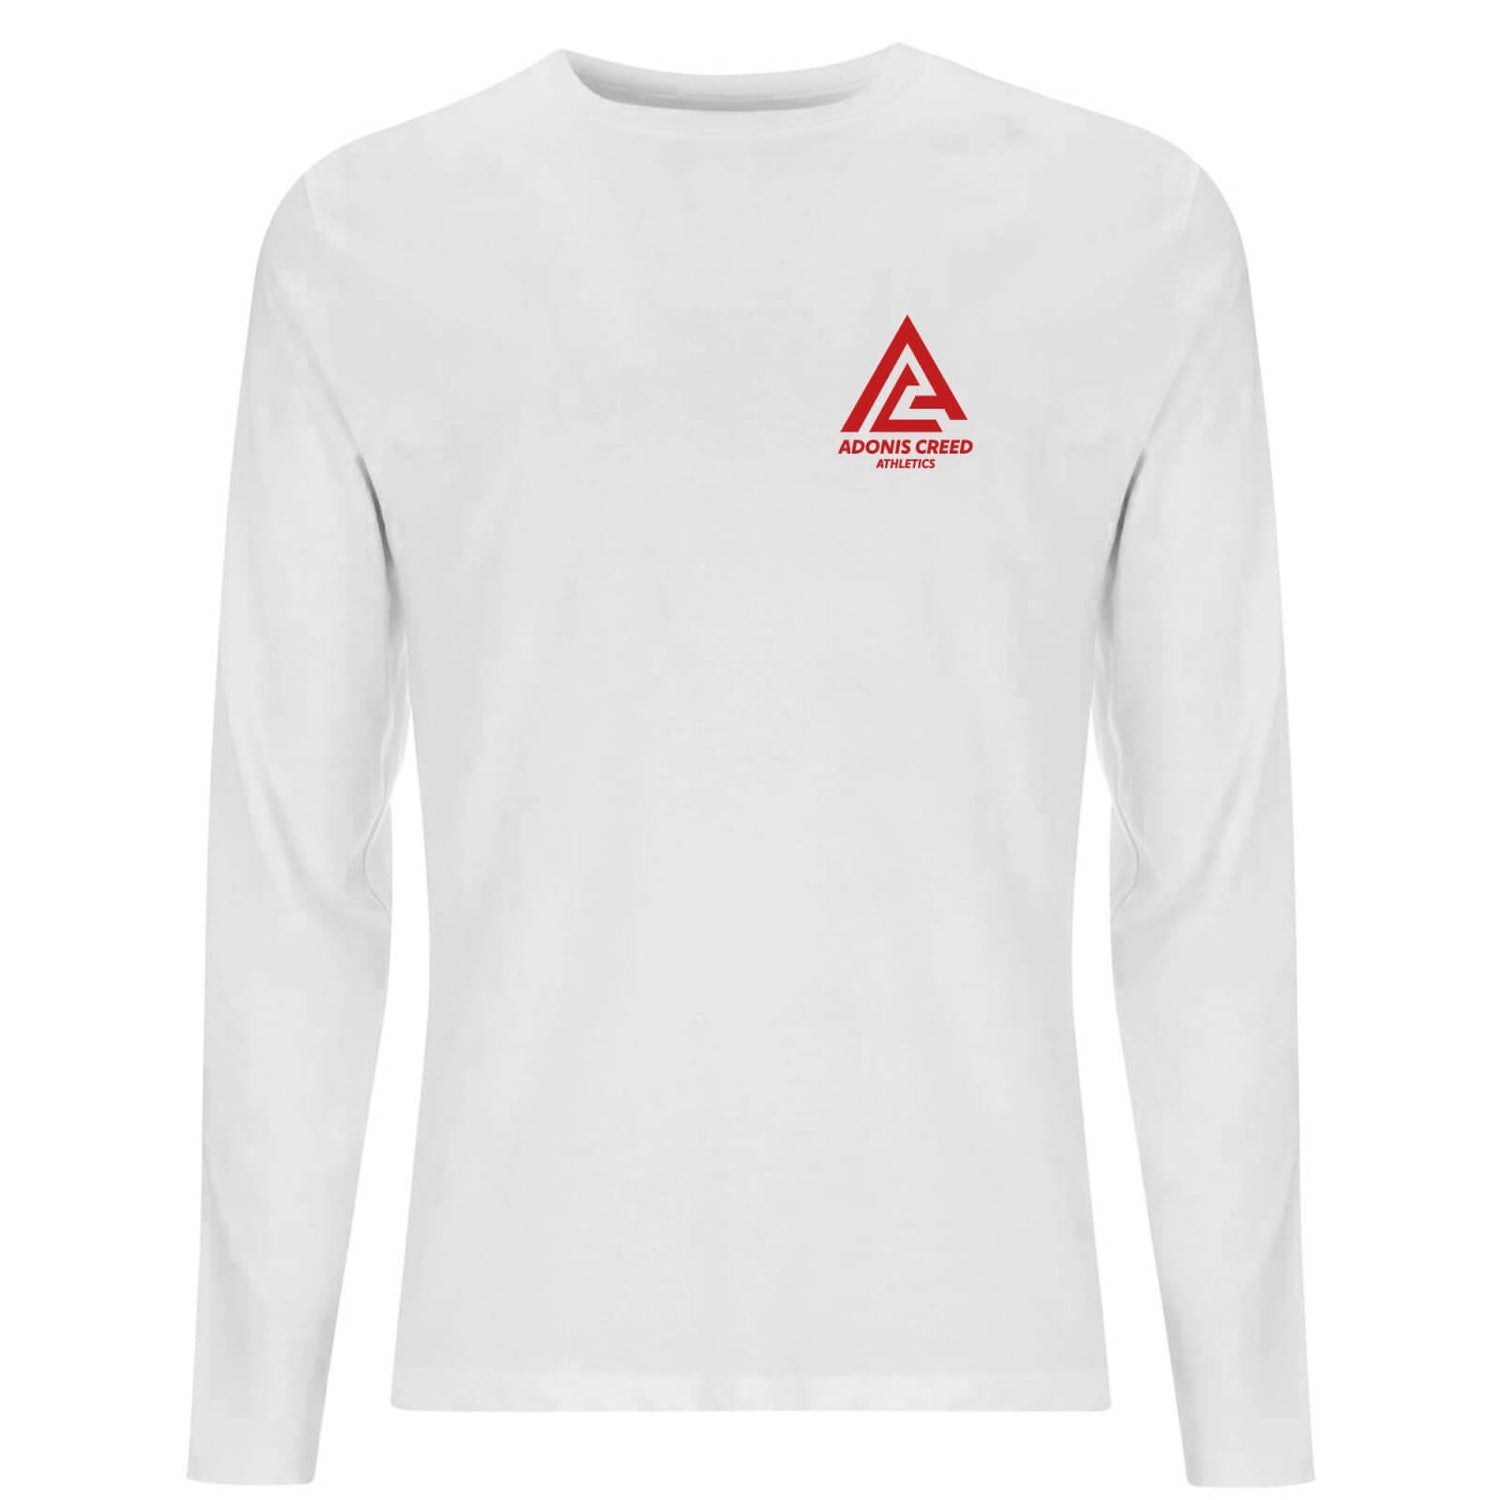 Creed Adonis Creed Athletics Logo Men's Long Sleeve T-Shirt - White - XS